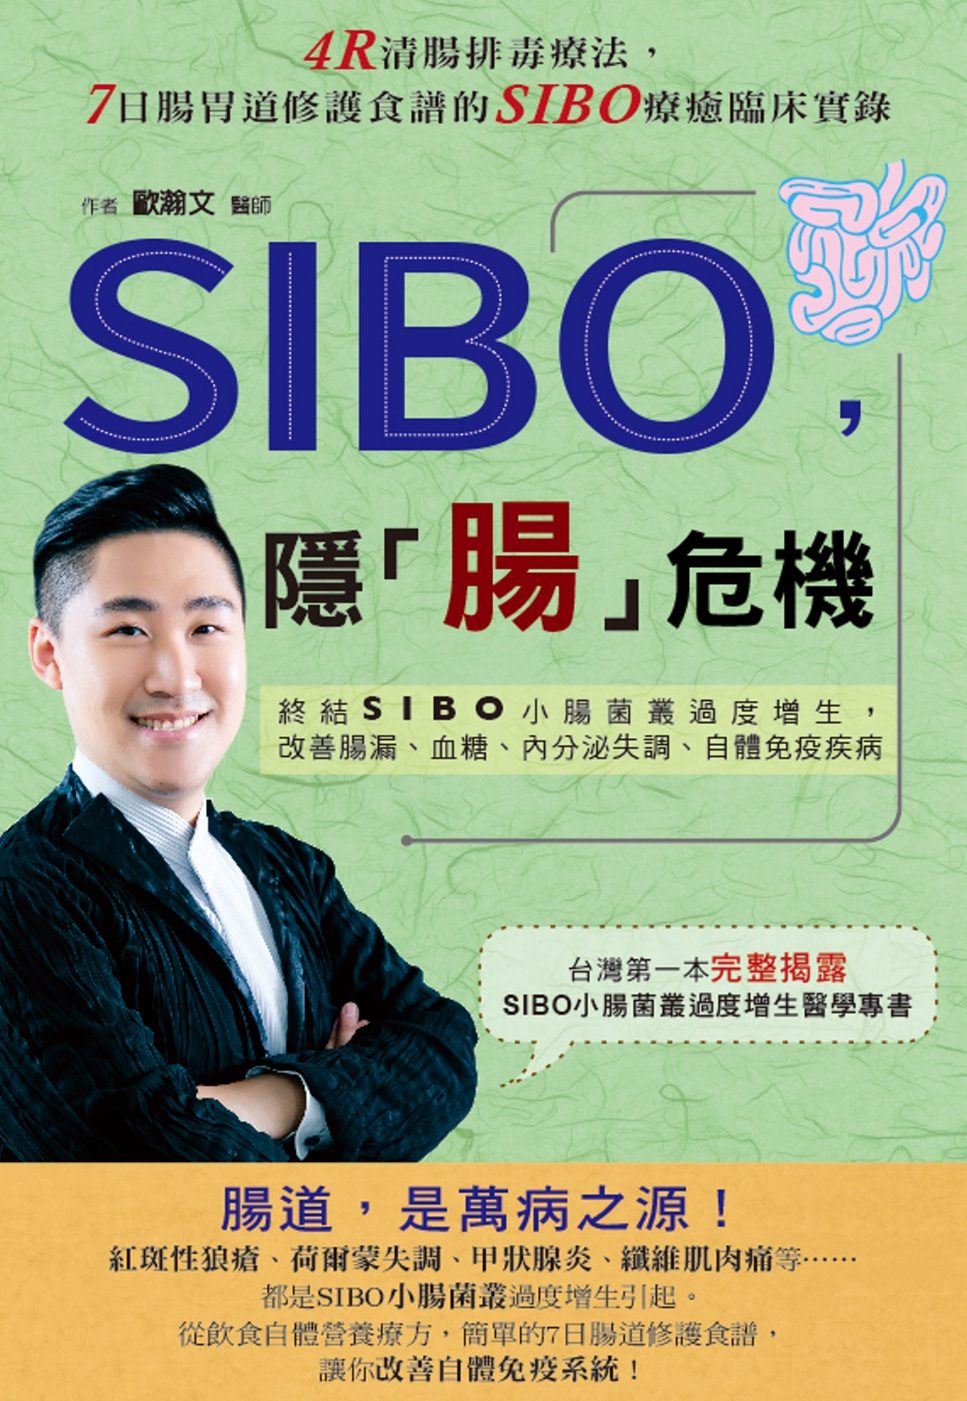 SIBO，隱「腸」危機：終結SIBO小腸菌叢過度增生，改善腸漏、血糖、內分泌失調、自體免疫疾病